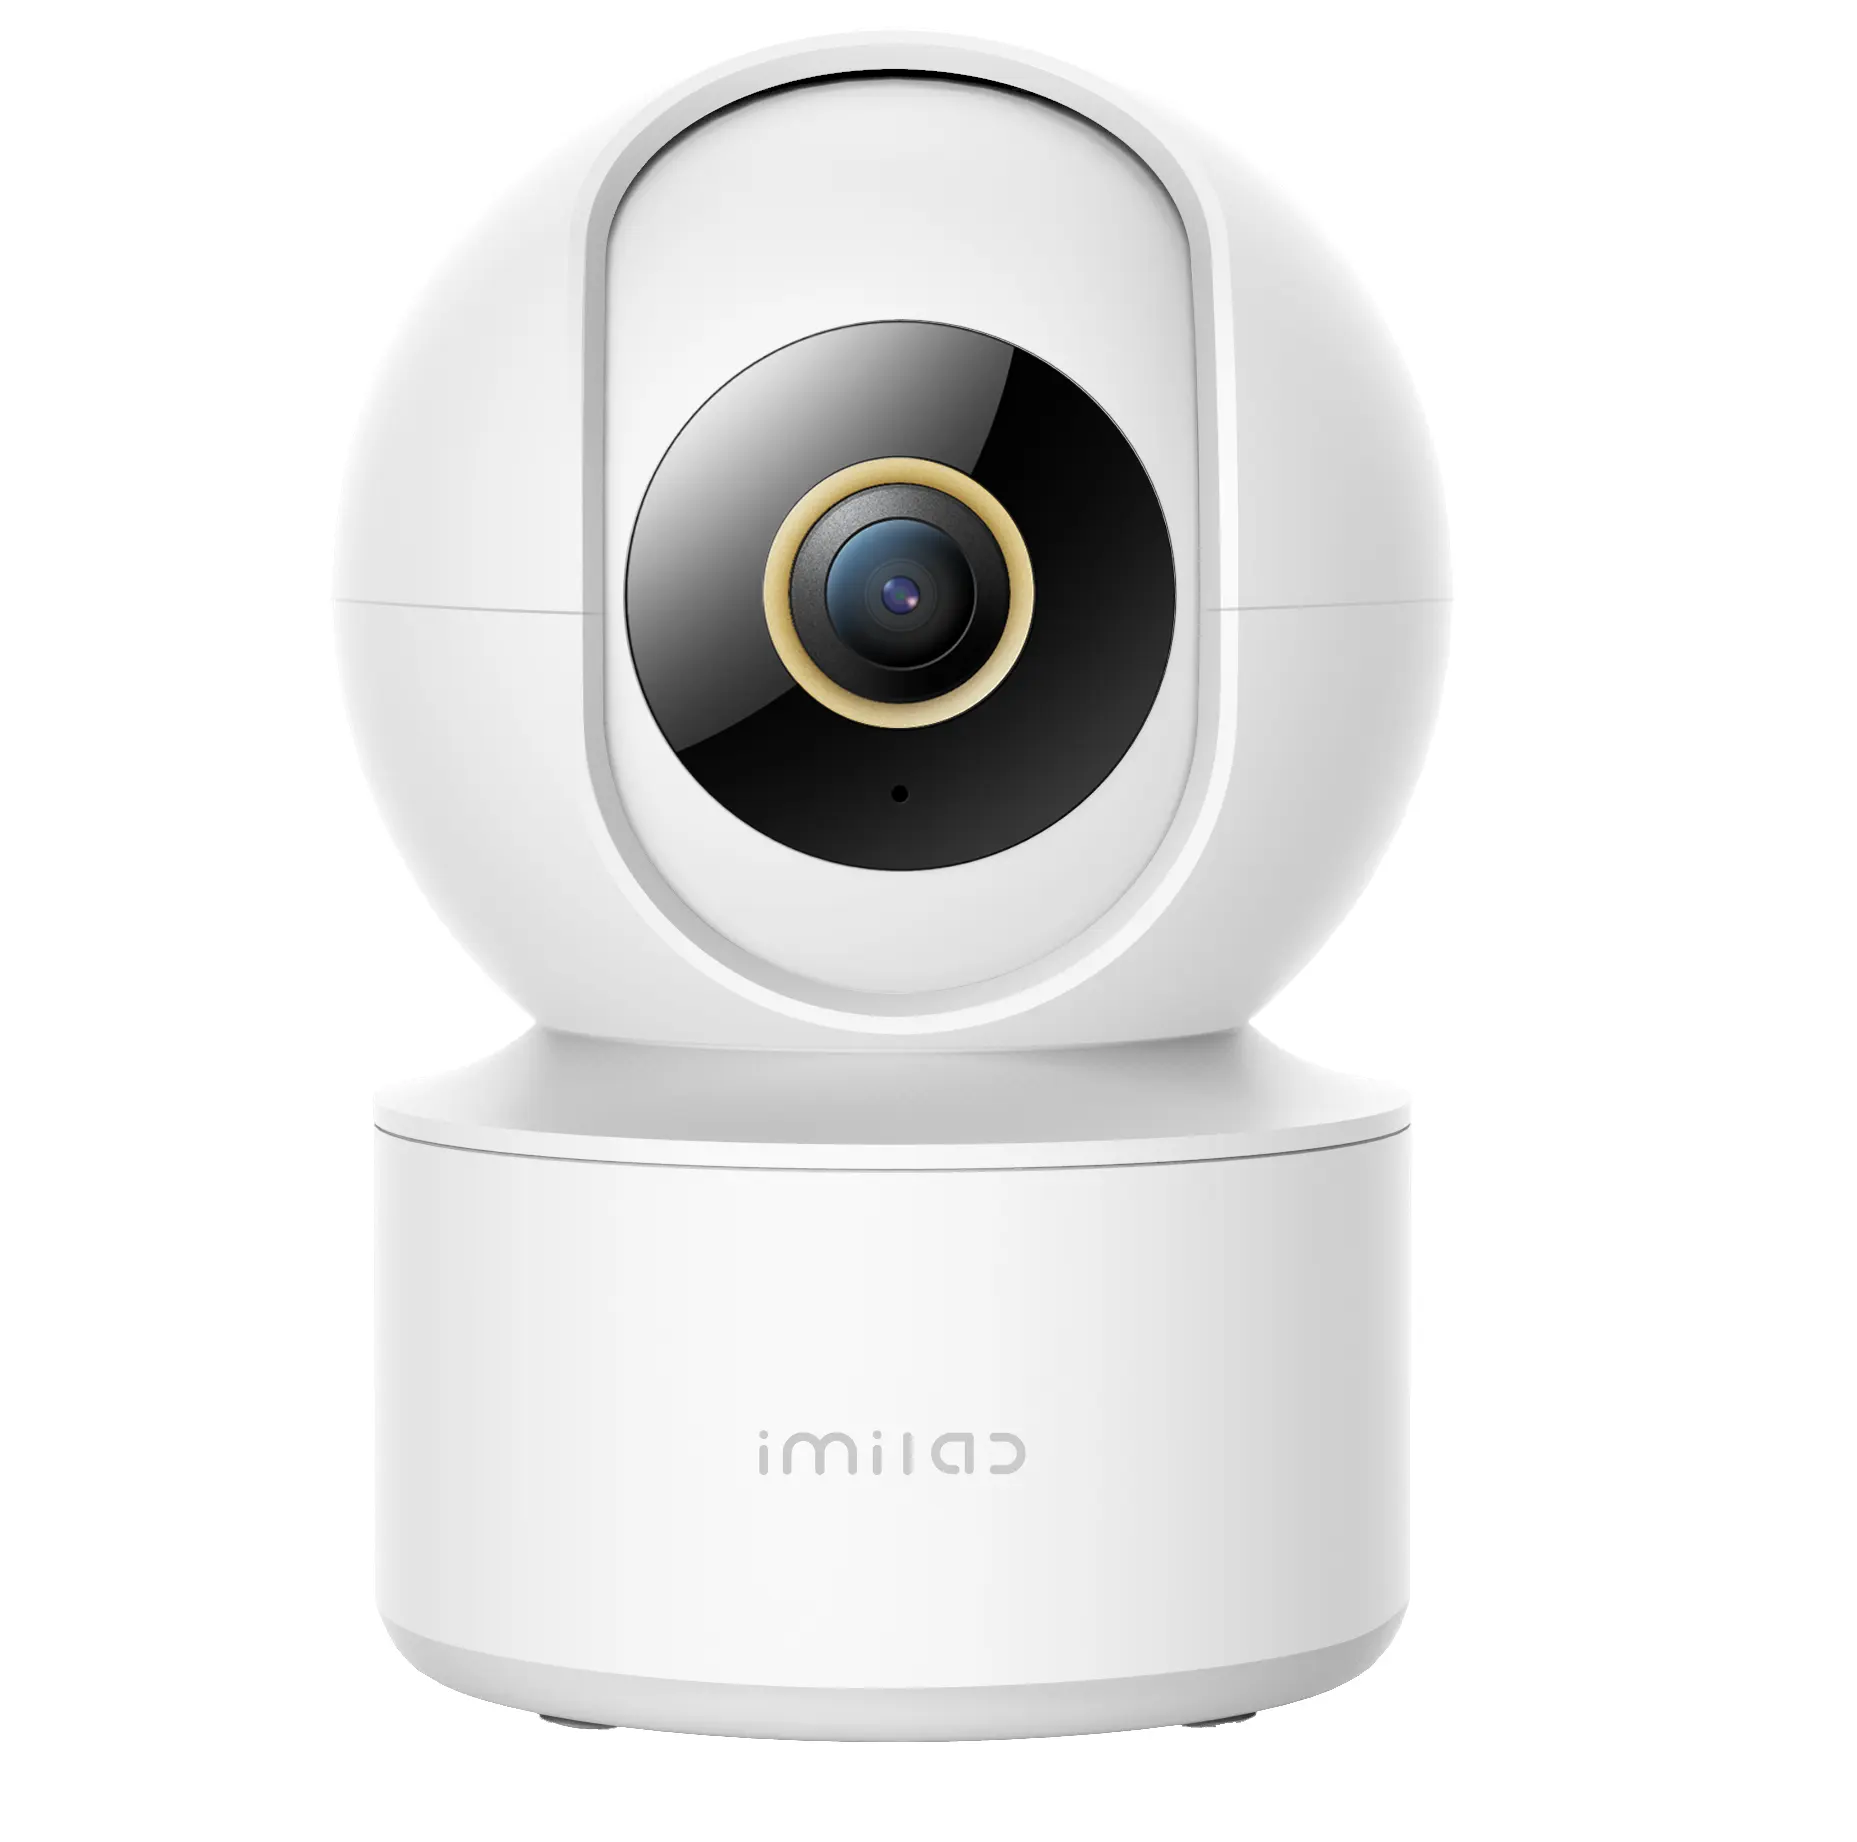 Imilab C21 hd mini camera home security camera easy installation cameras